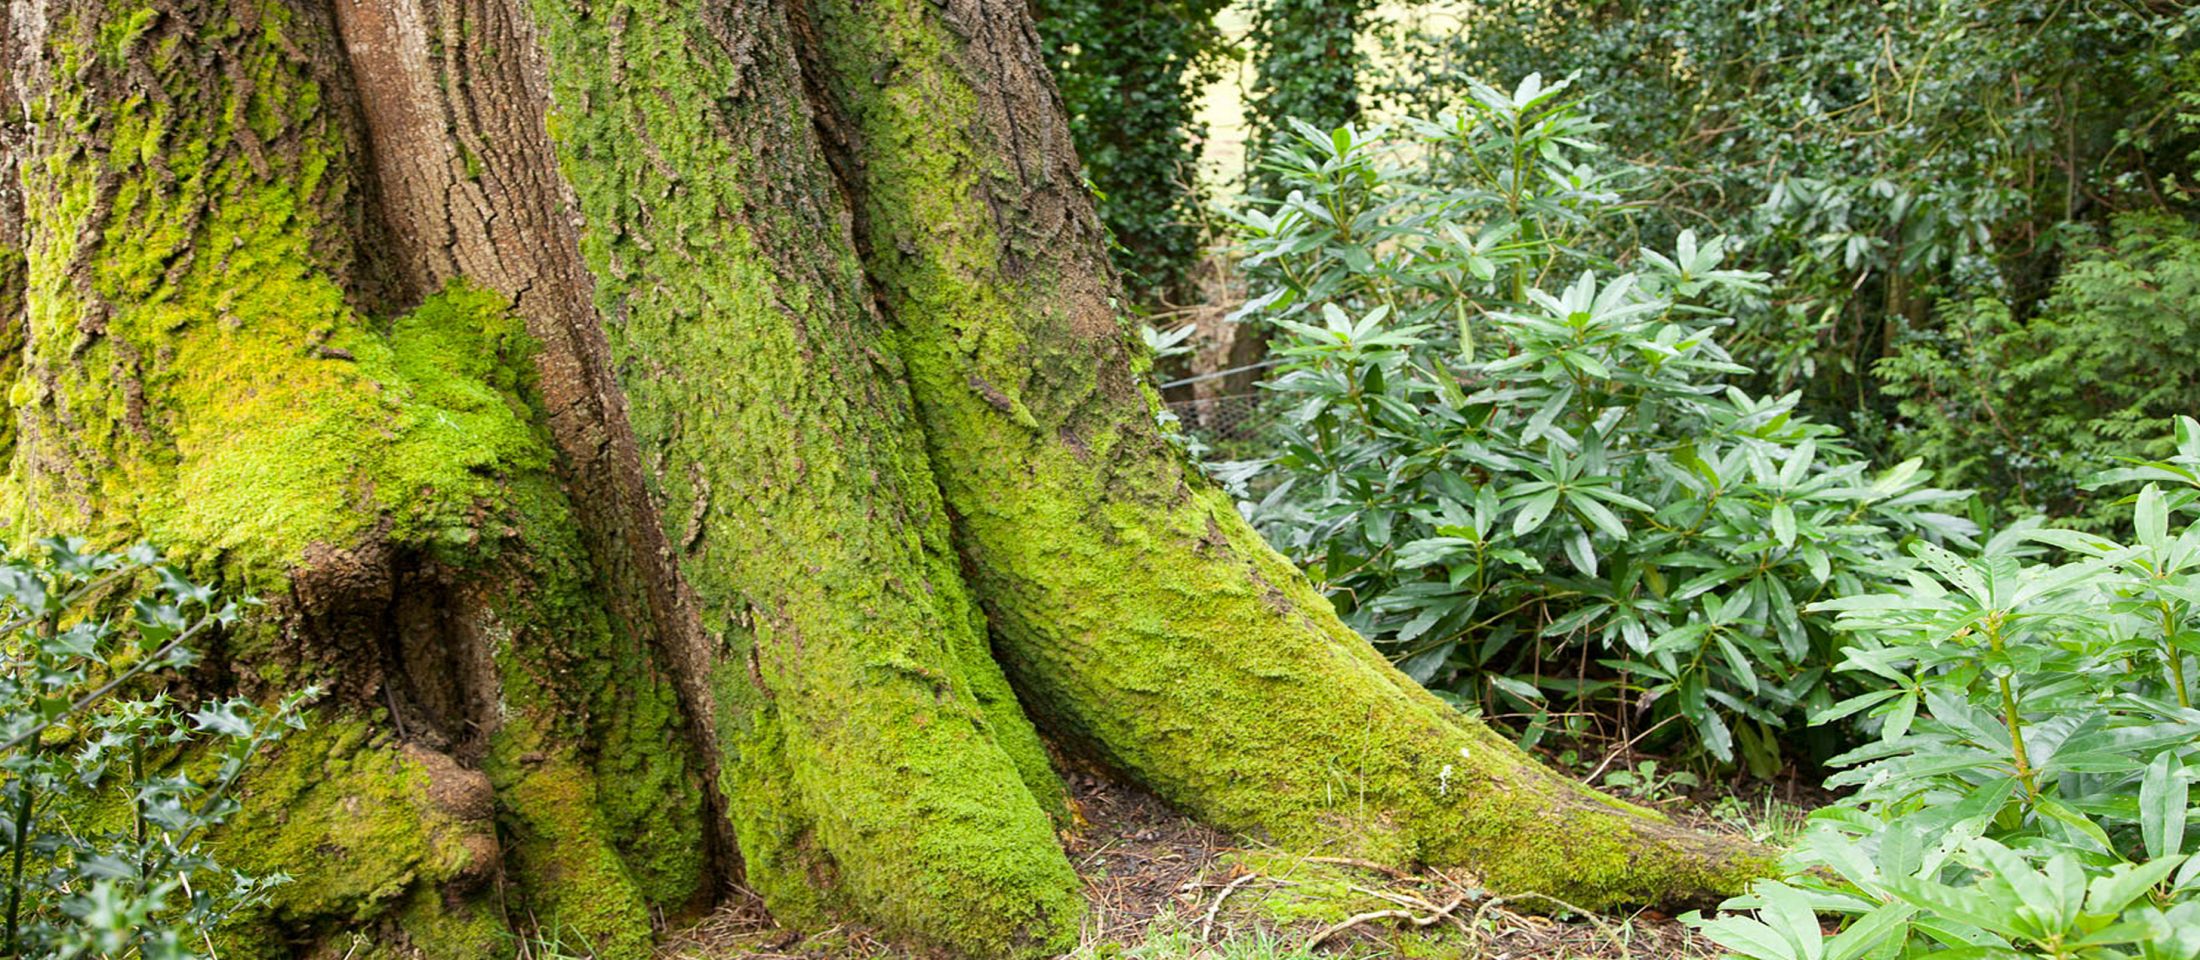 Ash tree in Scotney Castle gardens, Kent. Photo: John Miller.